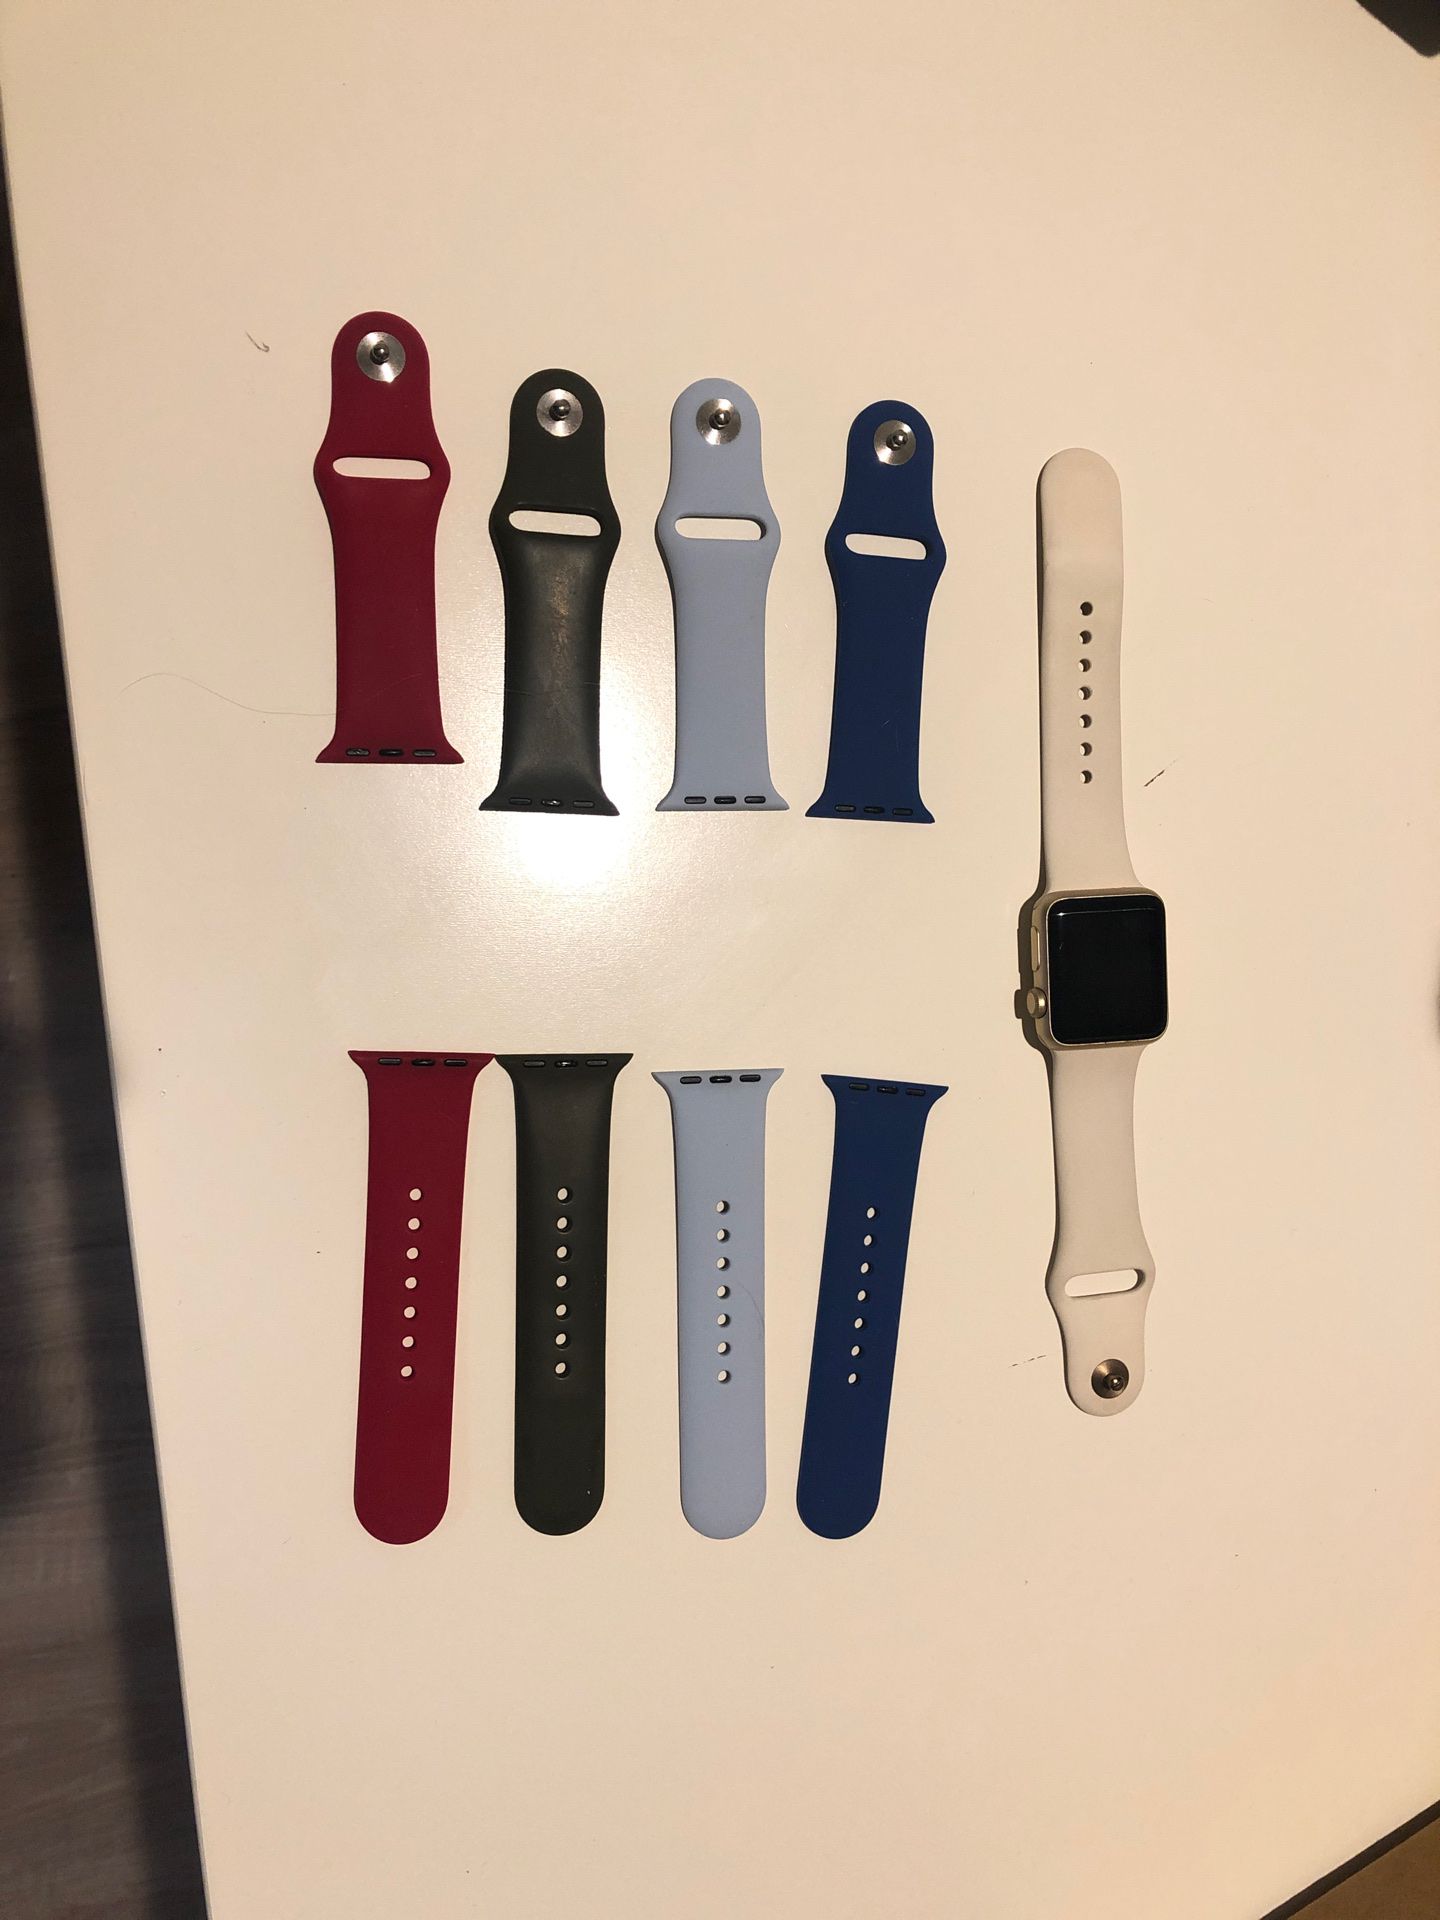 Series 1 Apple Watch